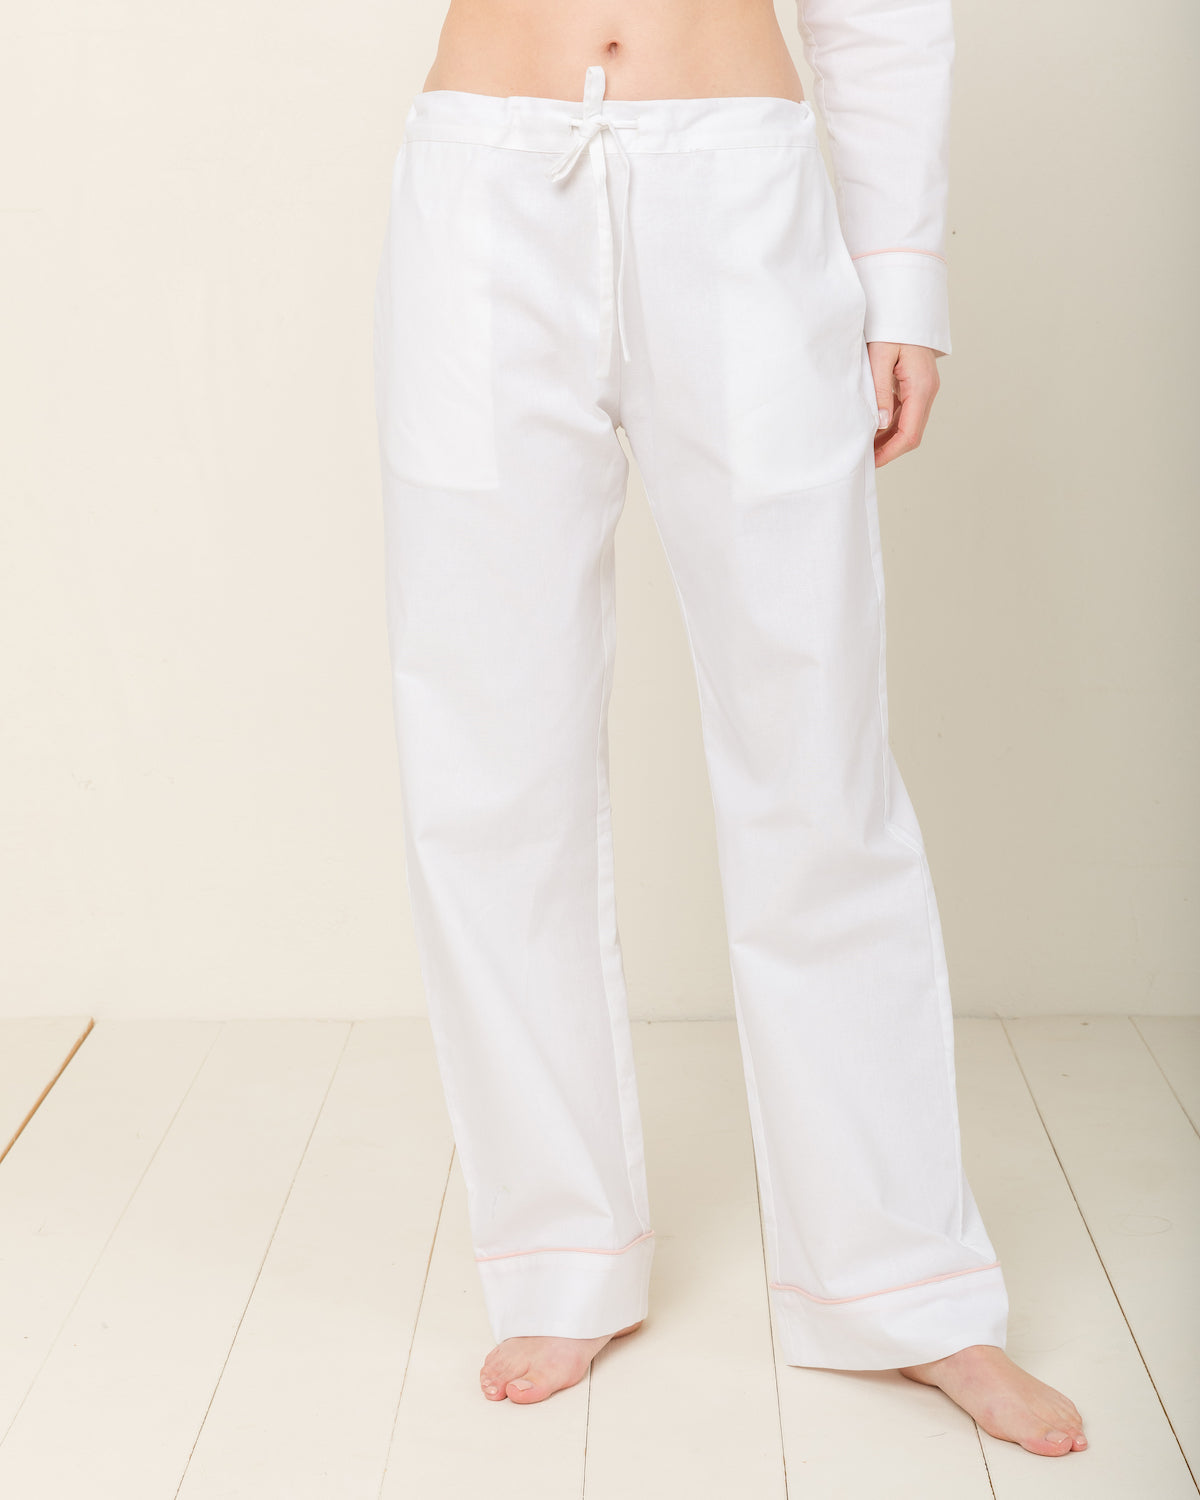 Sophia in Moonlight White - Bottom Loungewear, Pyjama, Seidenpyjama, Schlafanzug | RADICE